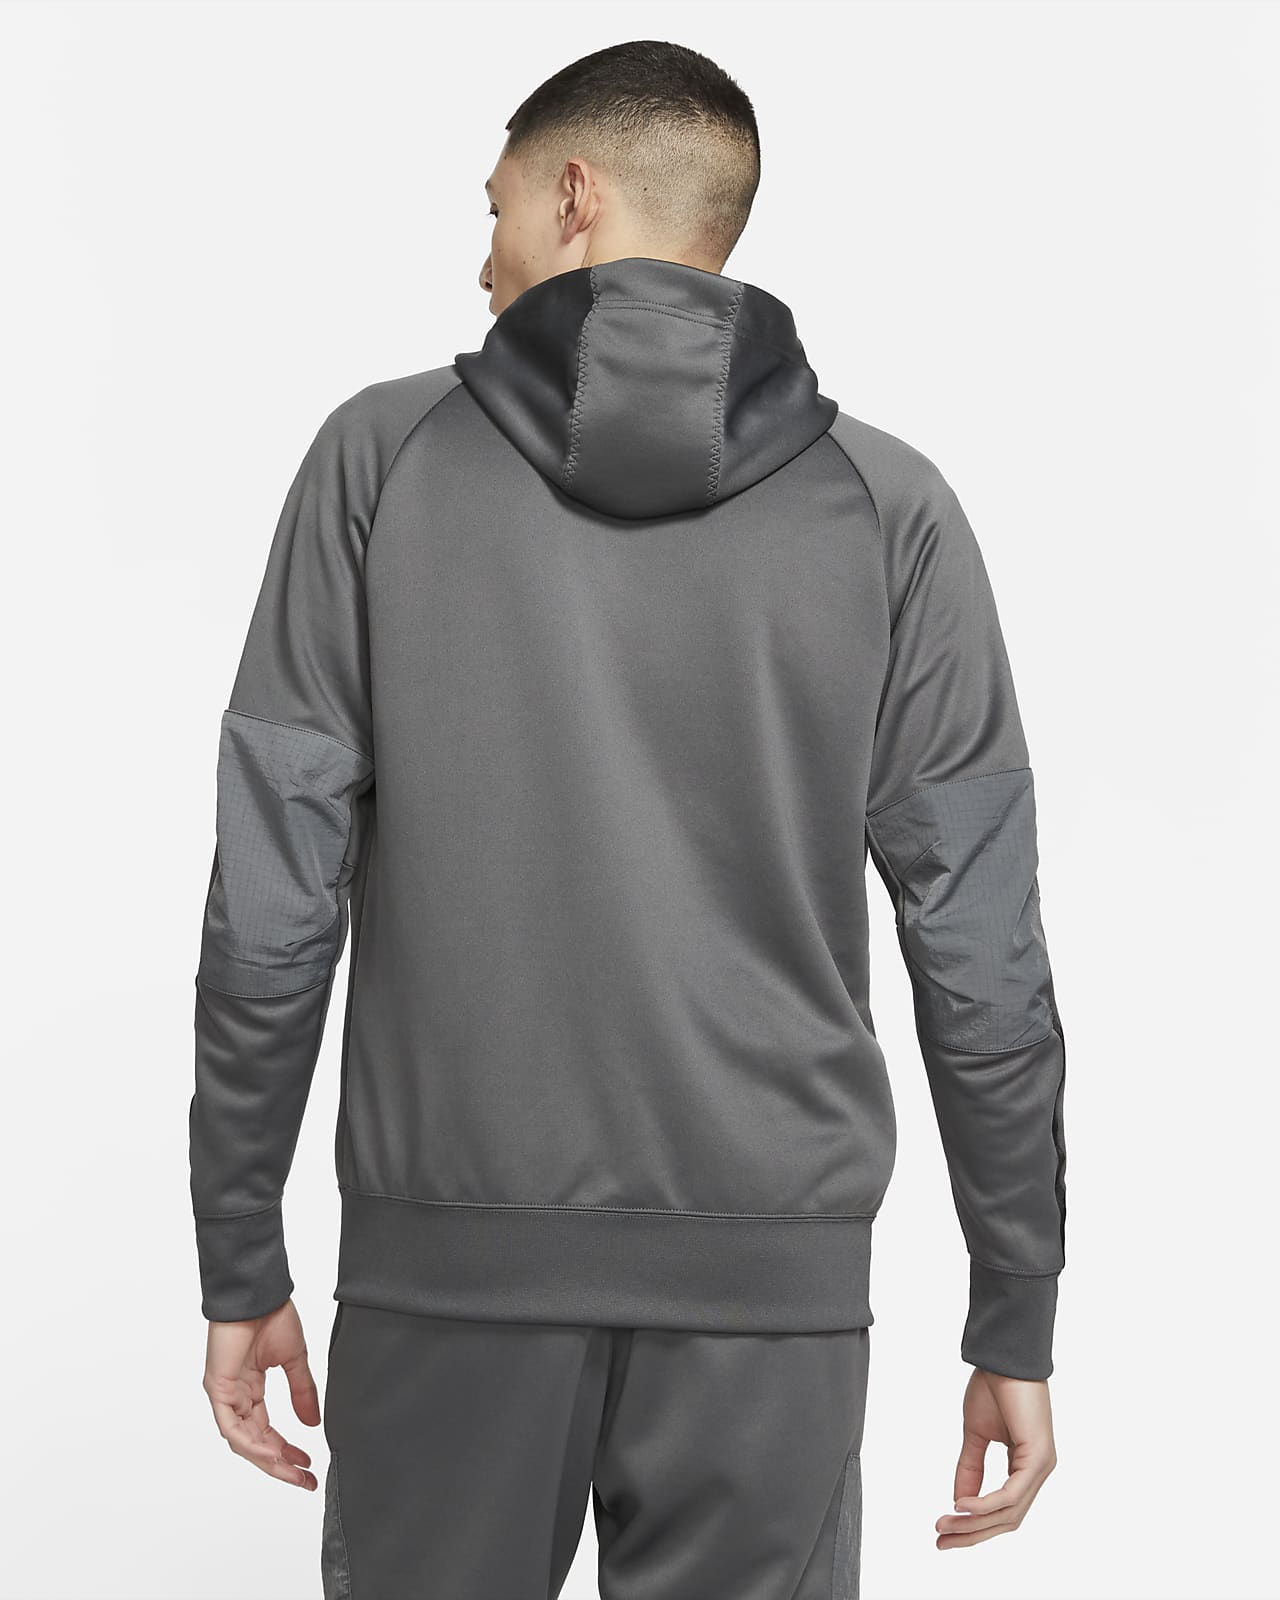 nike air max full zip hoodie grey